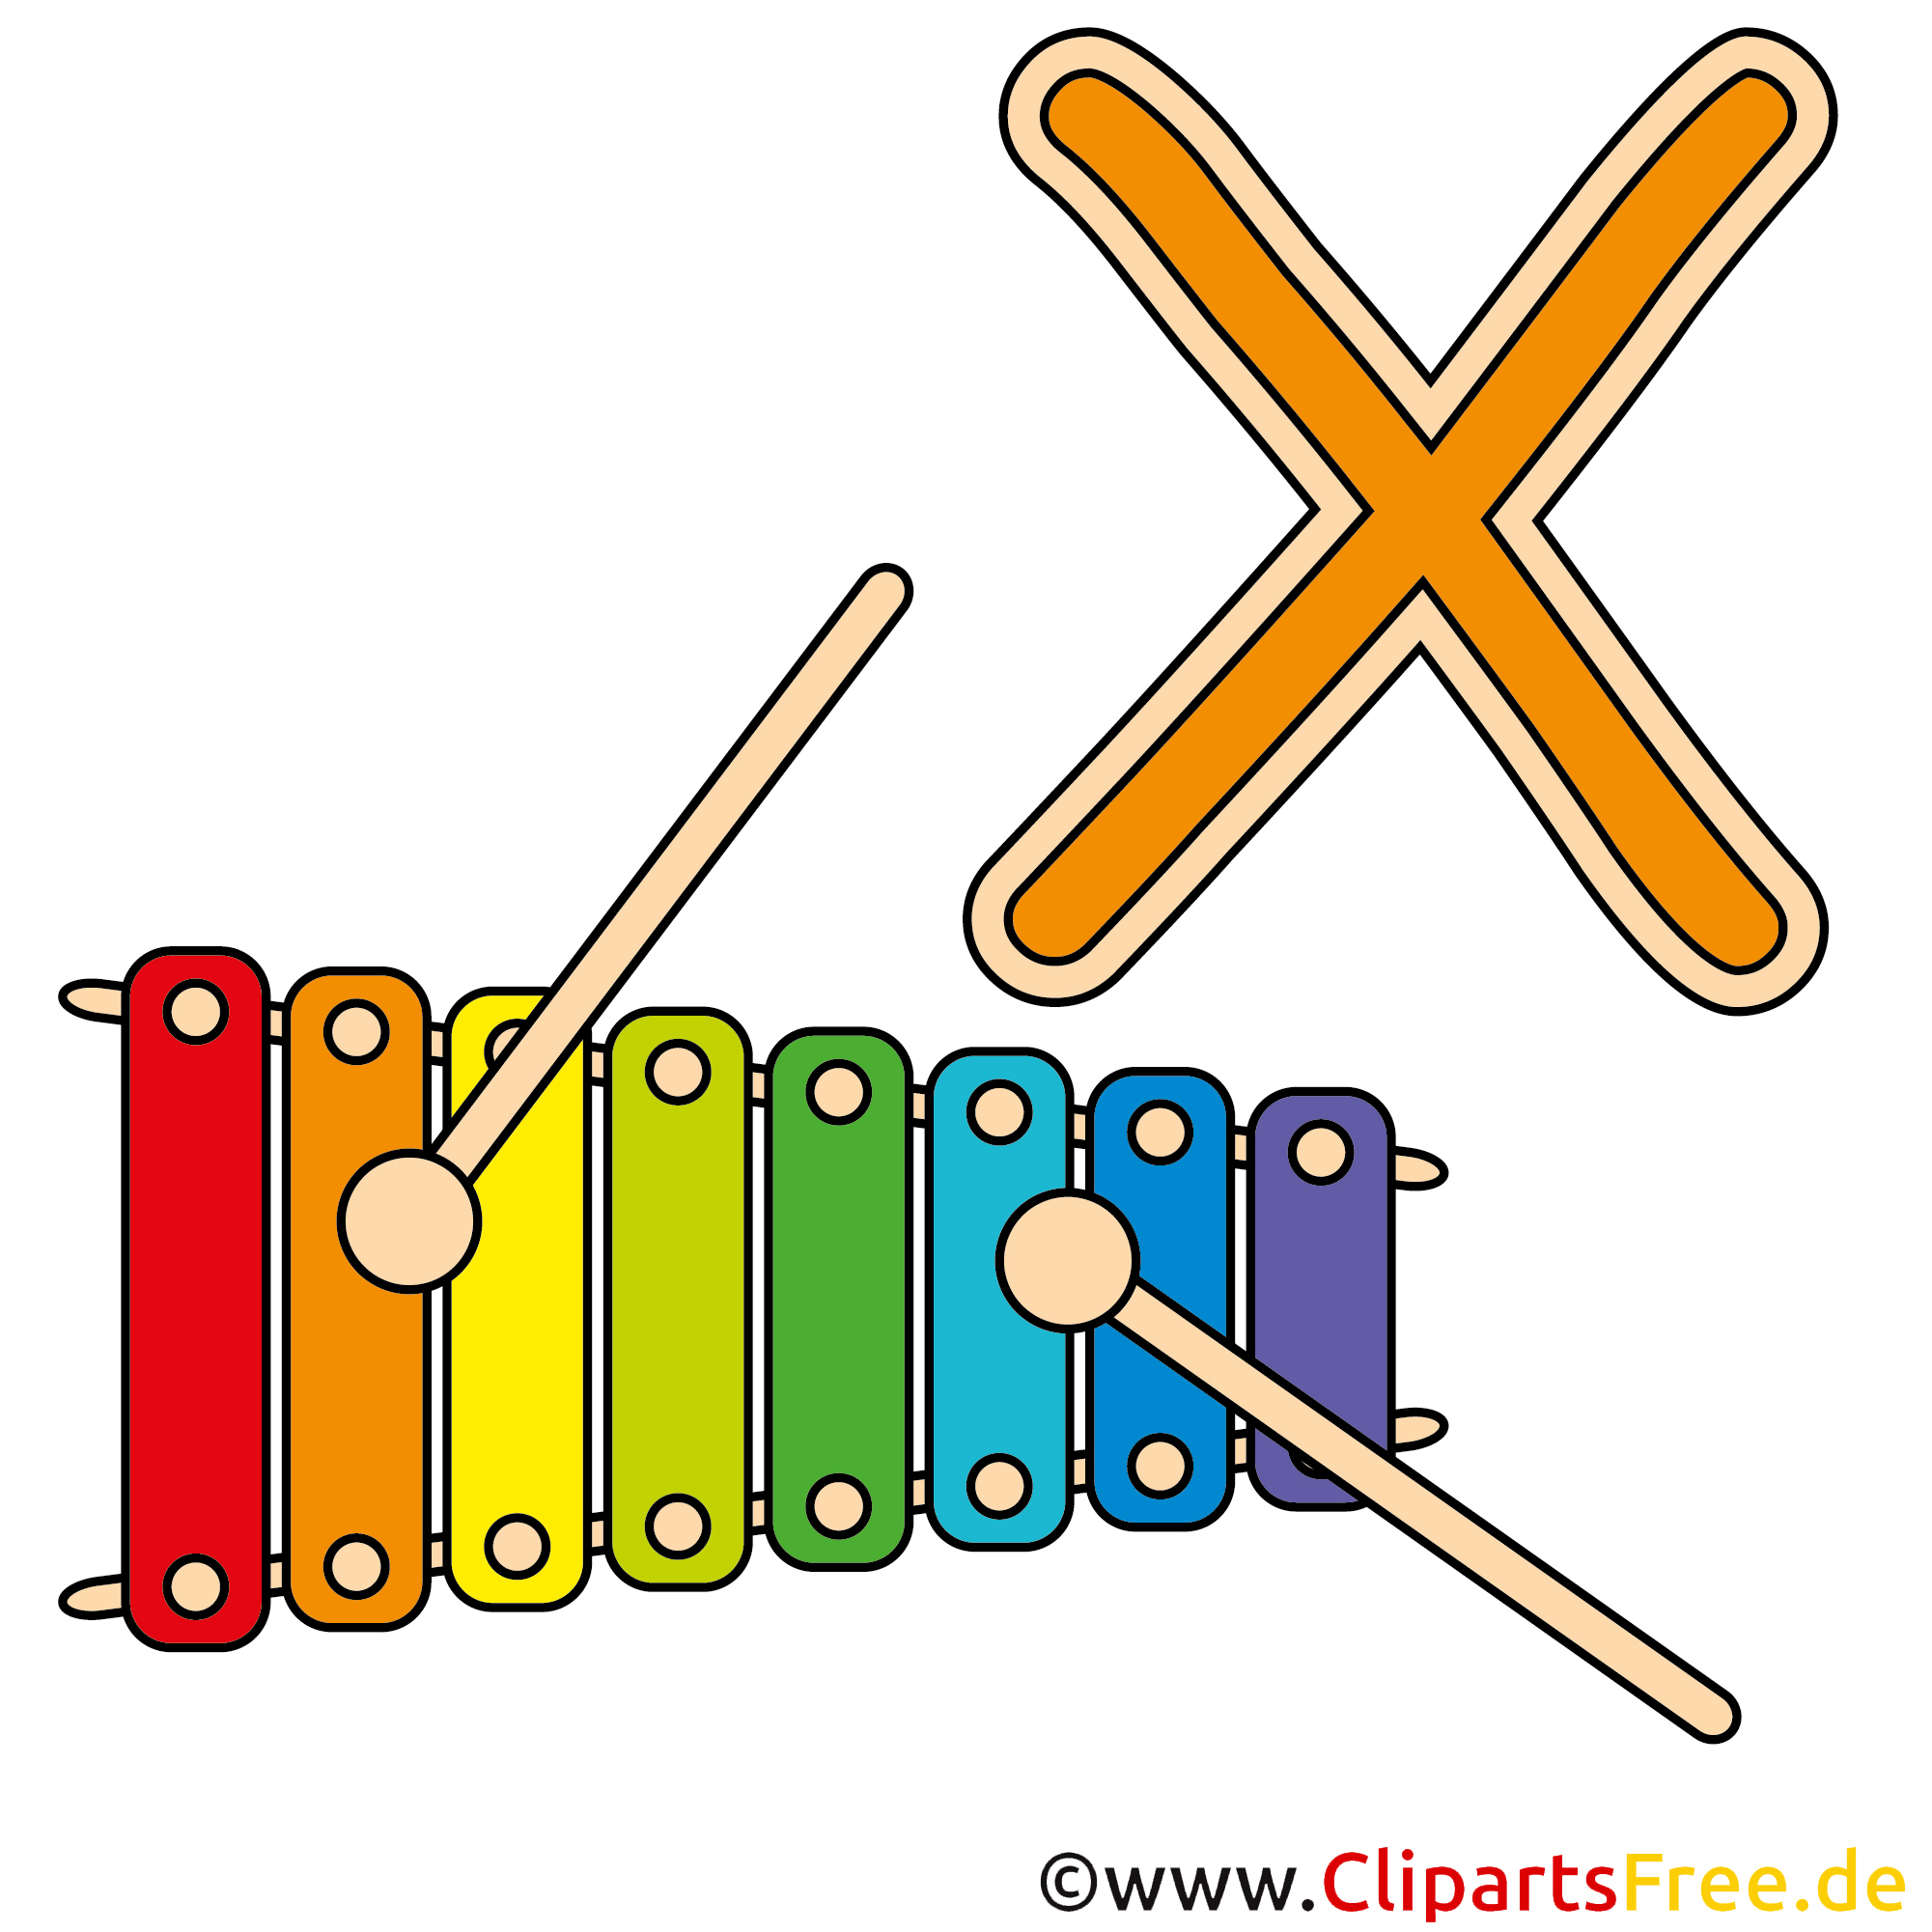 xylophone images clip art - photo #16